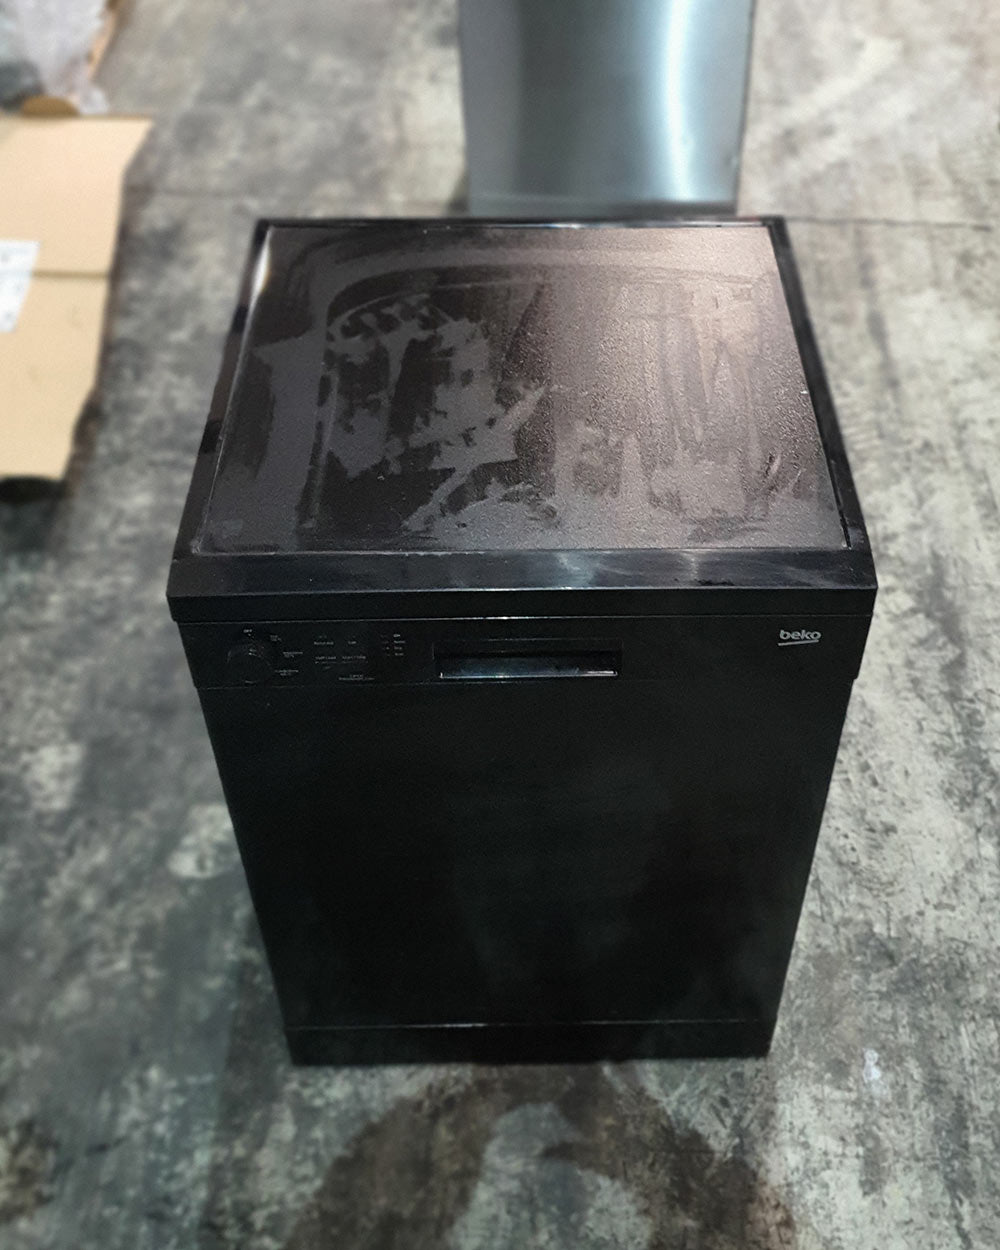 Beko 60cm Dishwasher 600dfn04210 Black